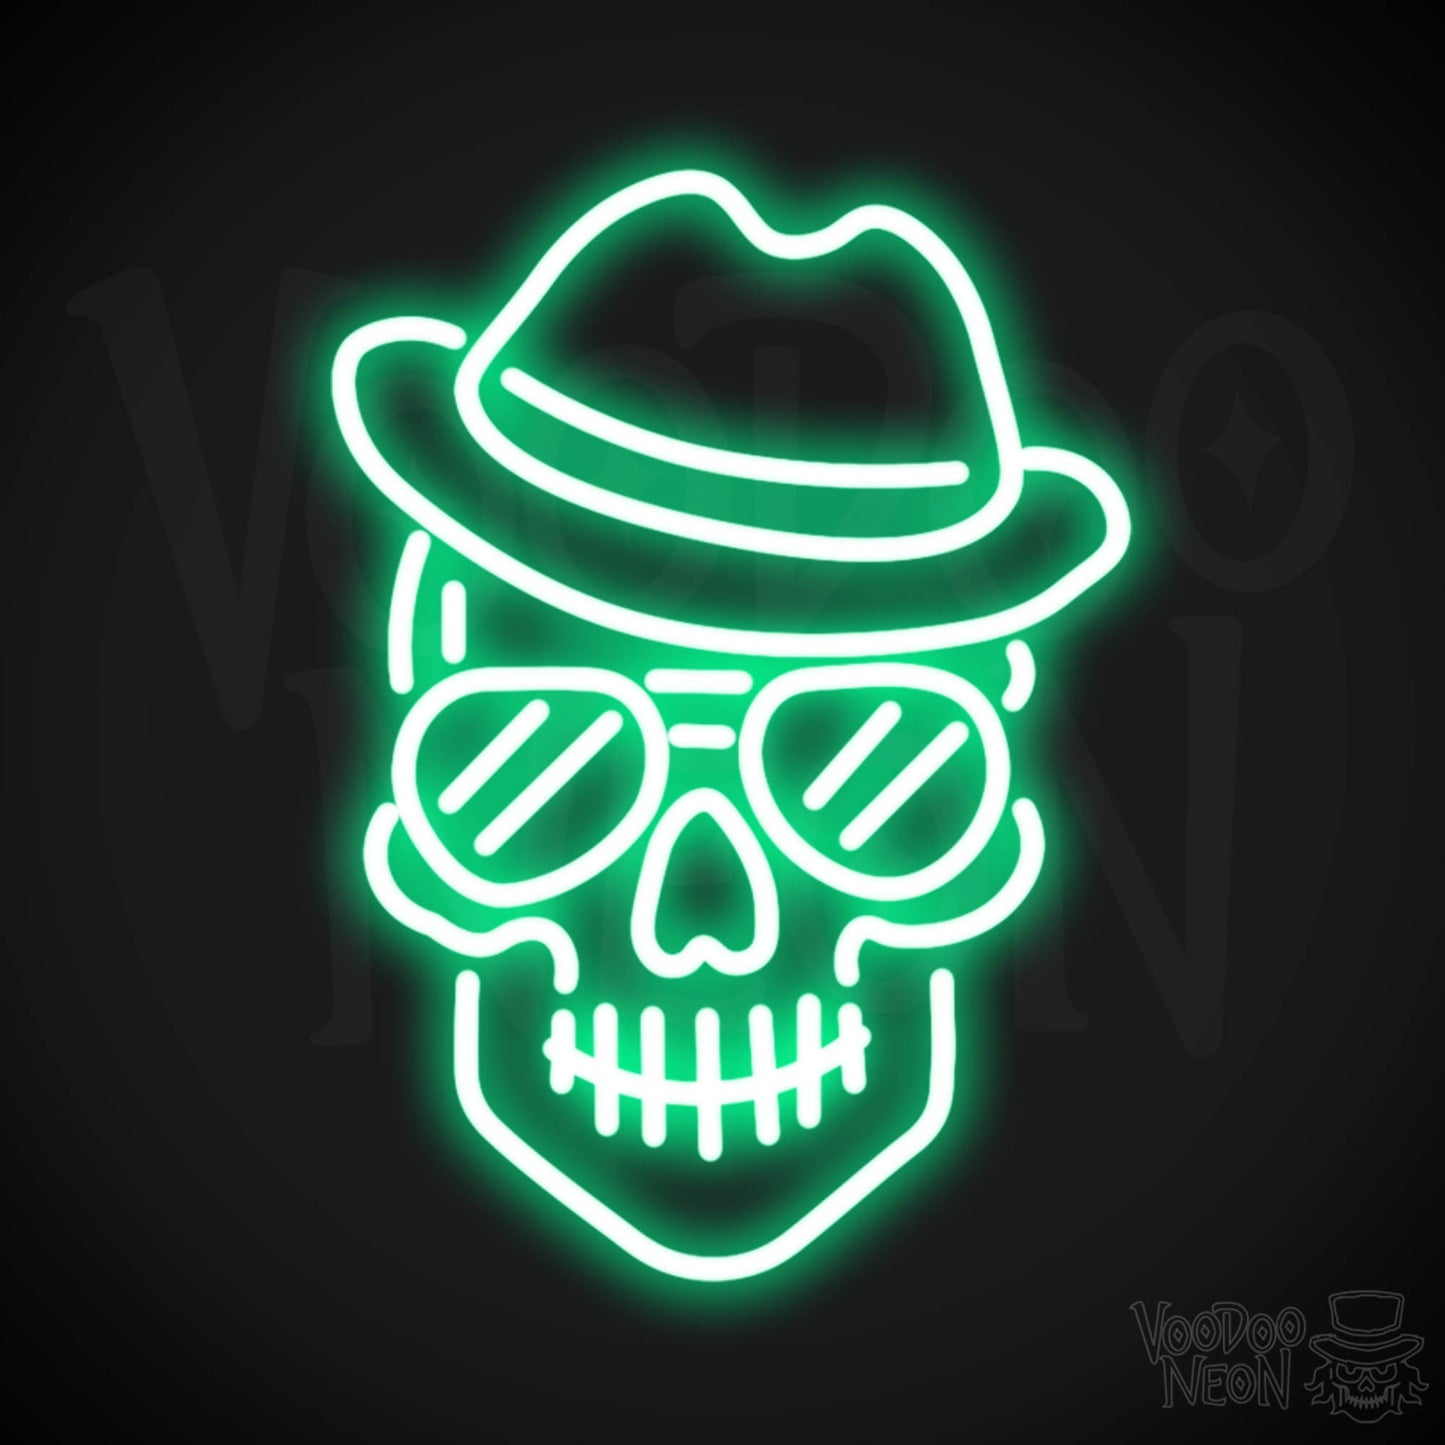 Skull Face Neon Sign - Neon Skull Face Sign - Neon Skull Light - Wall Art - Color Green